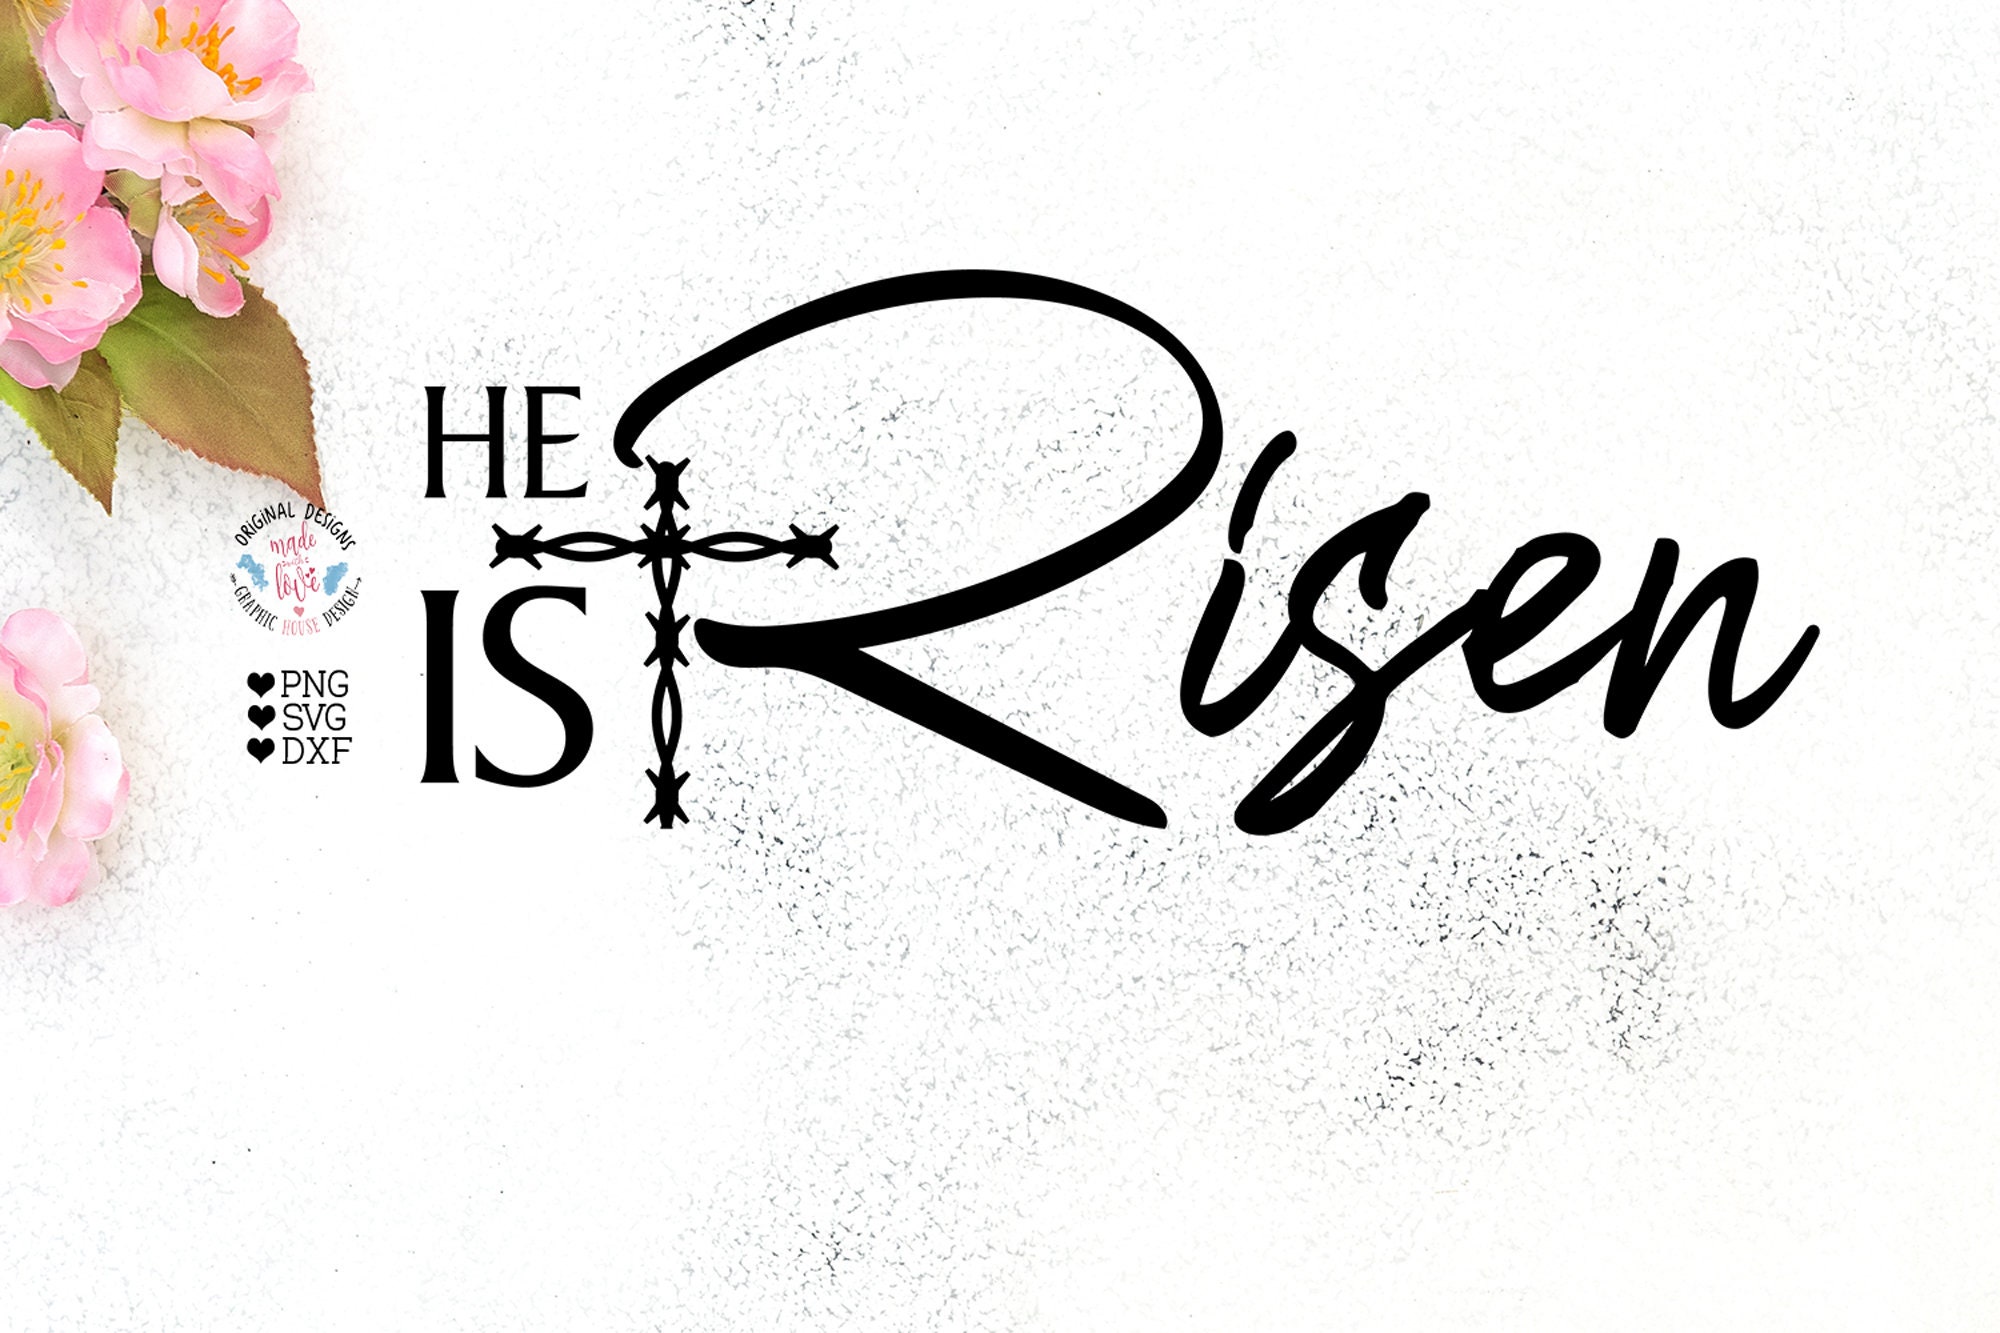 Easter Resurrection Vector Hd Images, Easter Resurrection Vector  Illustration, Christ, Illustration, Resurrection PNG Image For Free Download